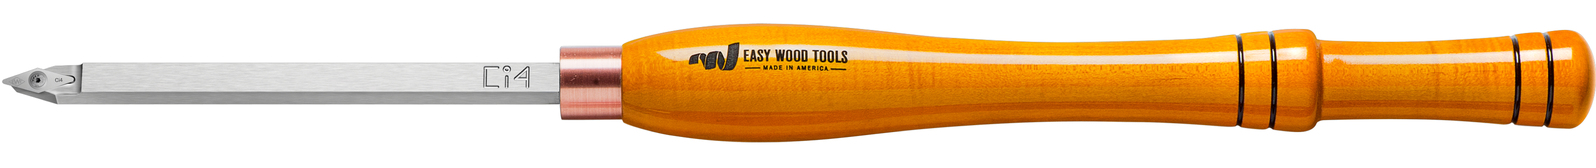 Easy Wood Tools Full Size Easy Detailer